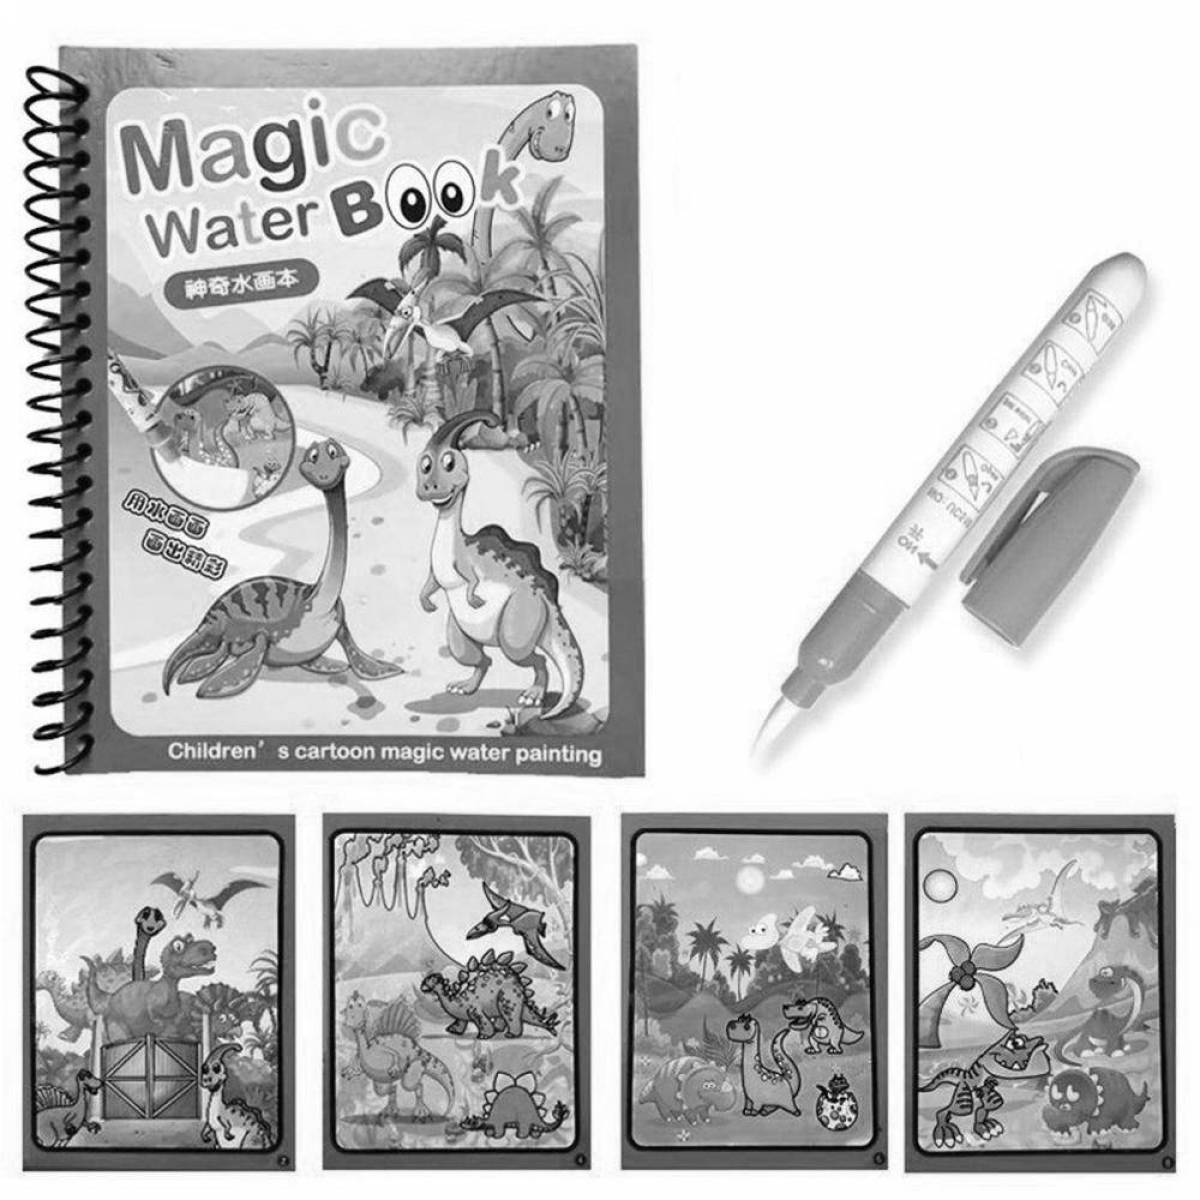 Hypnotic coloring magic water book